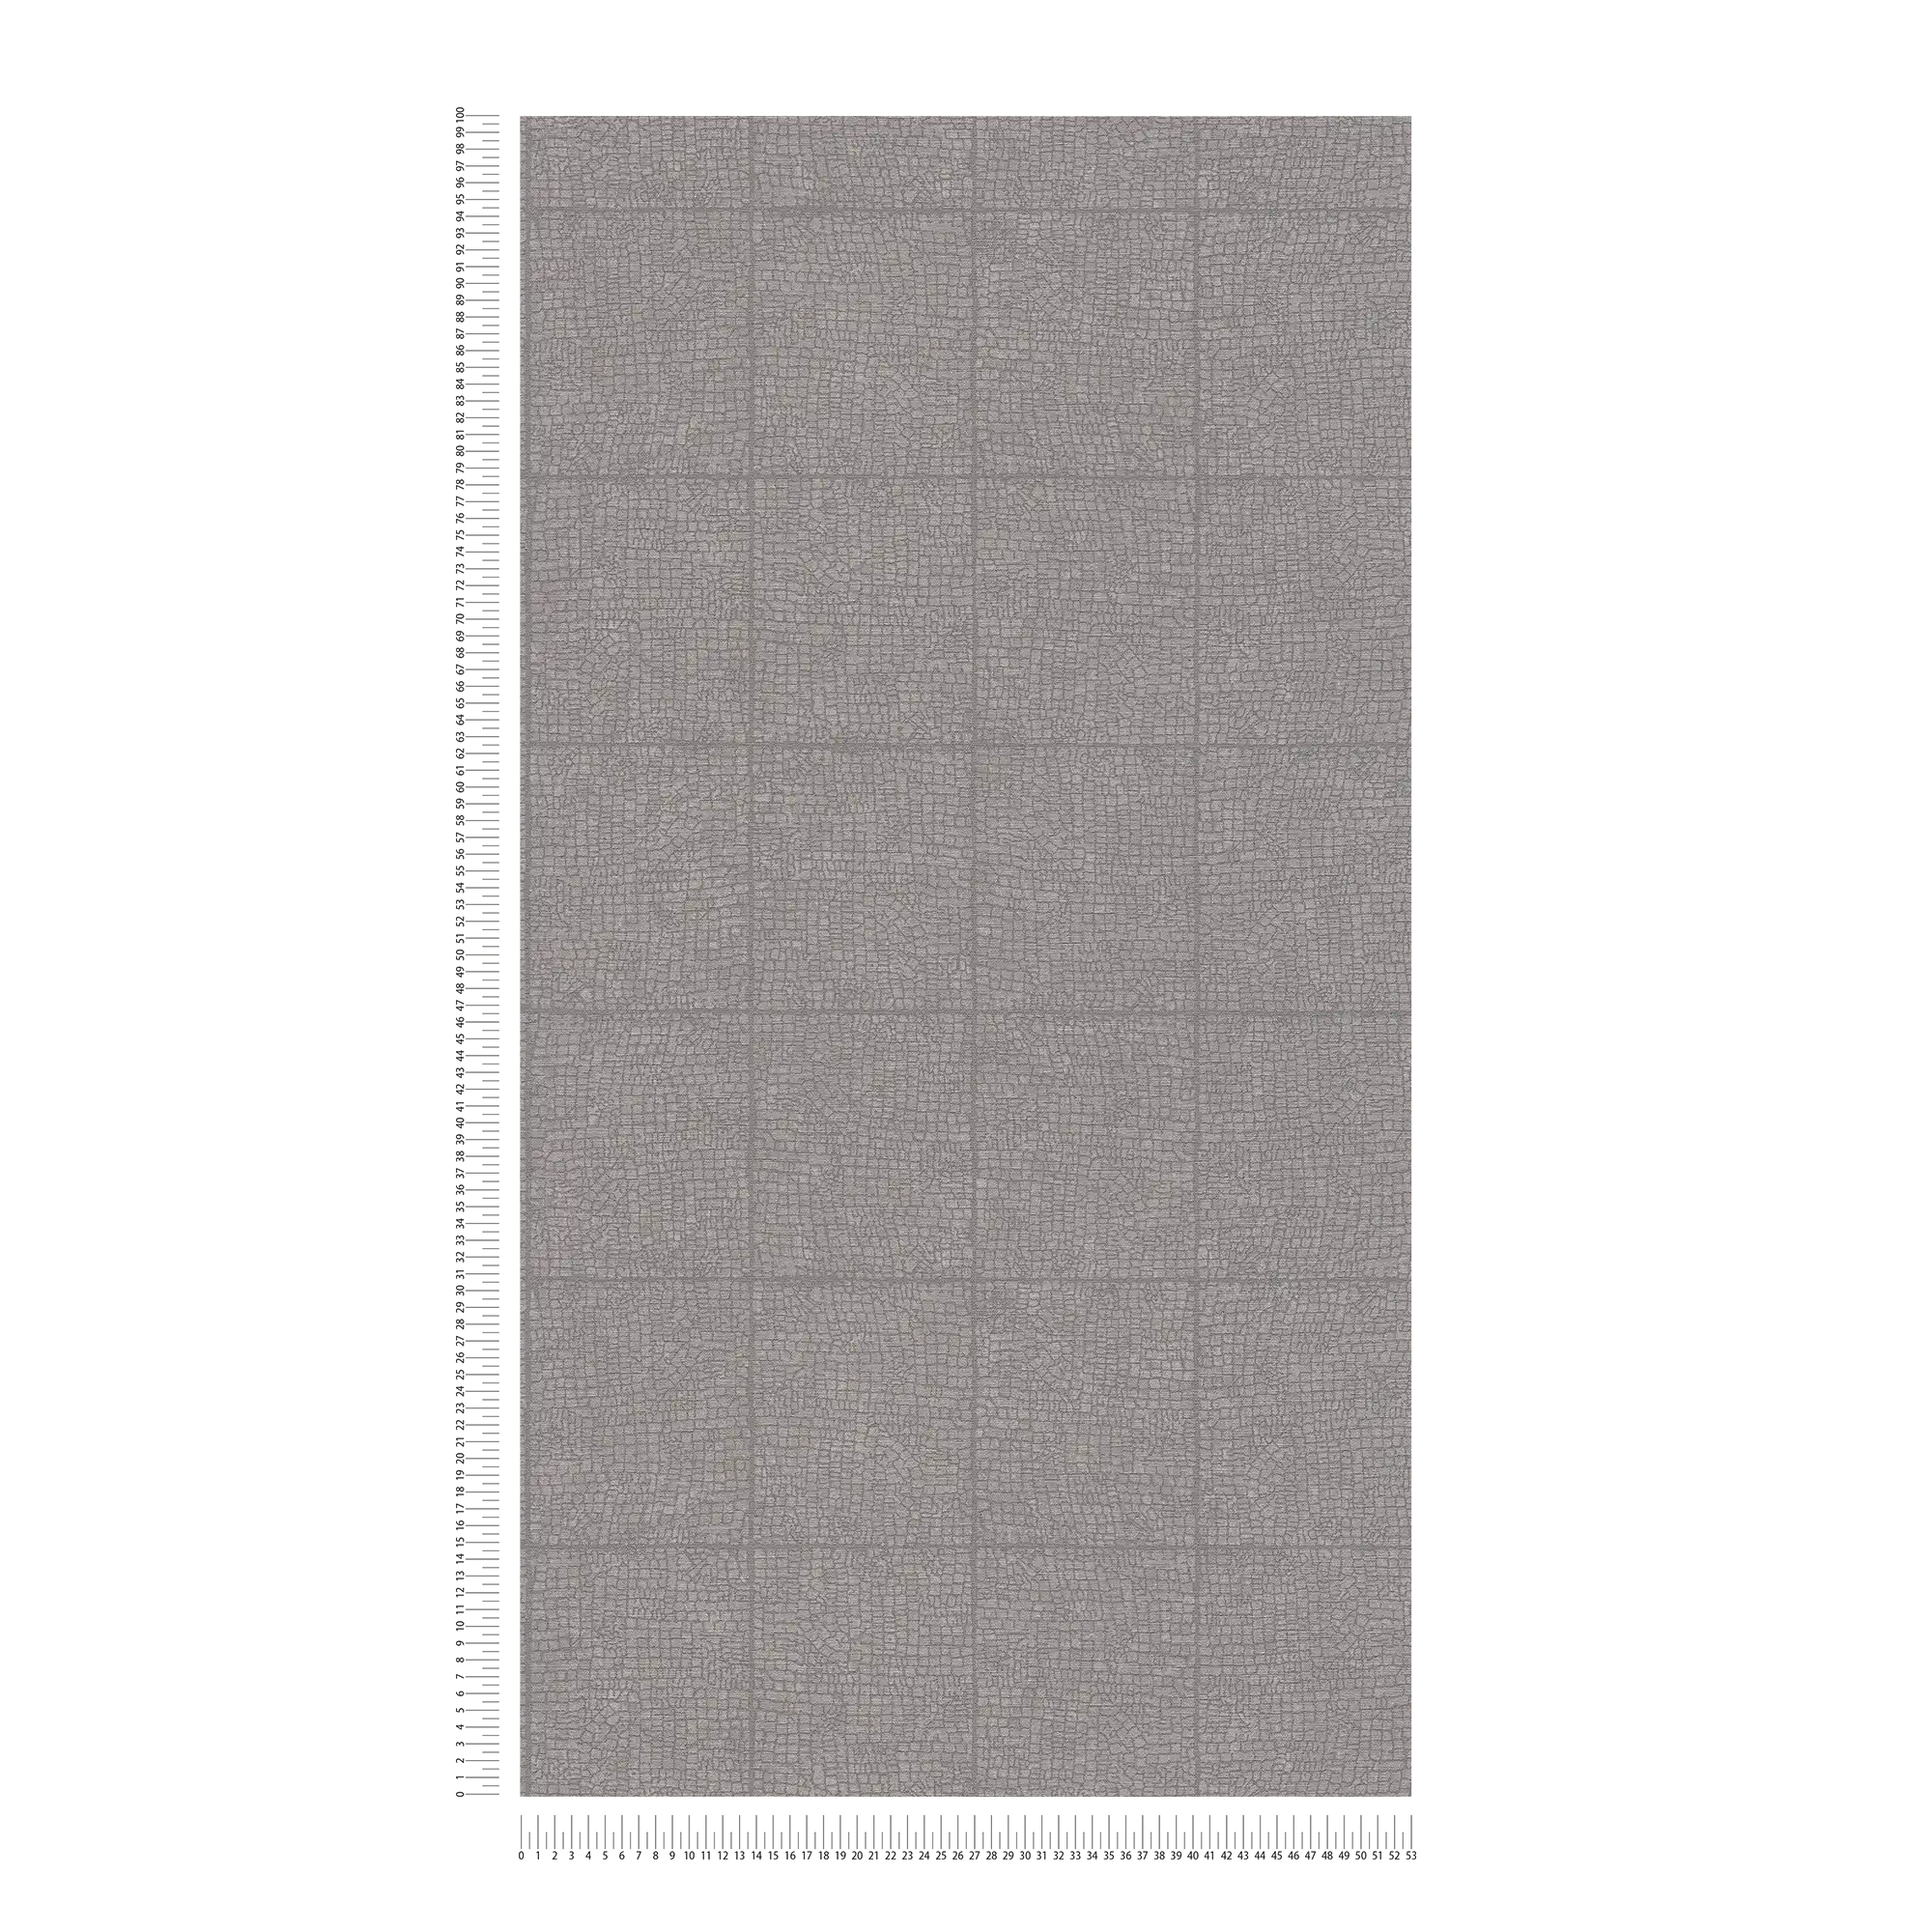             Tile optics wallpaper used look & crackle effect - grey
        